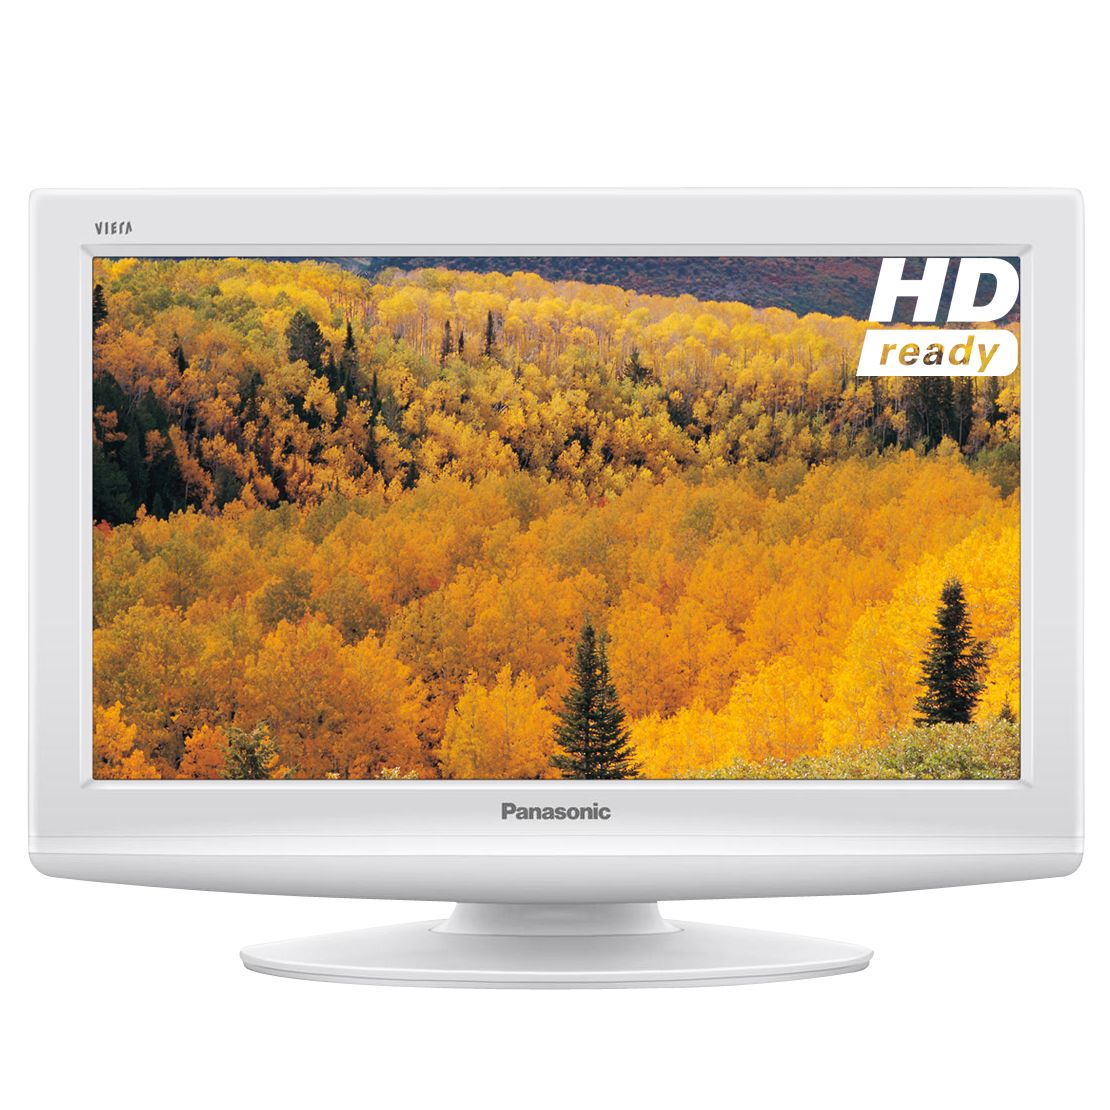 Panasonic Viera TX-L19C20 LCD HD Ready Digital Television, 19 Inch, White at John Lewis